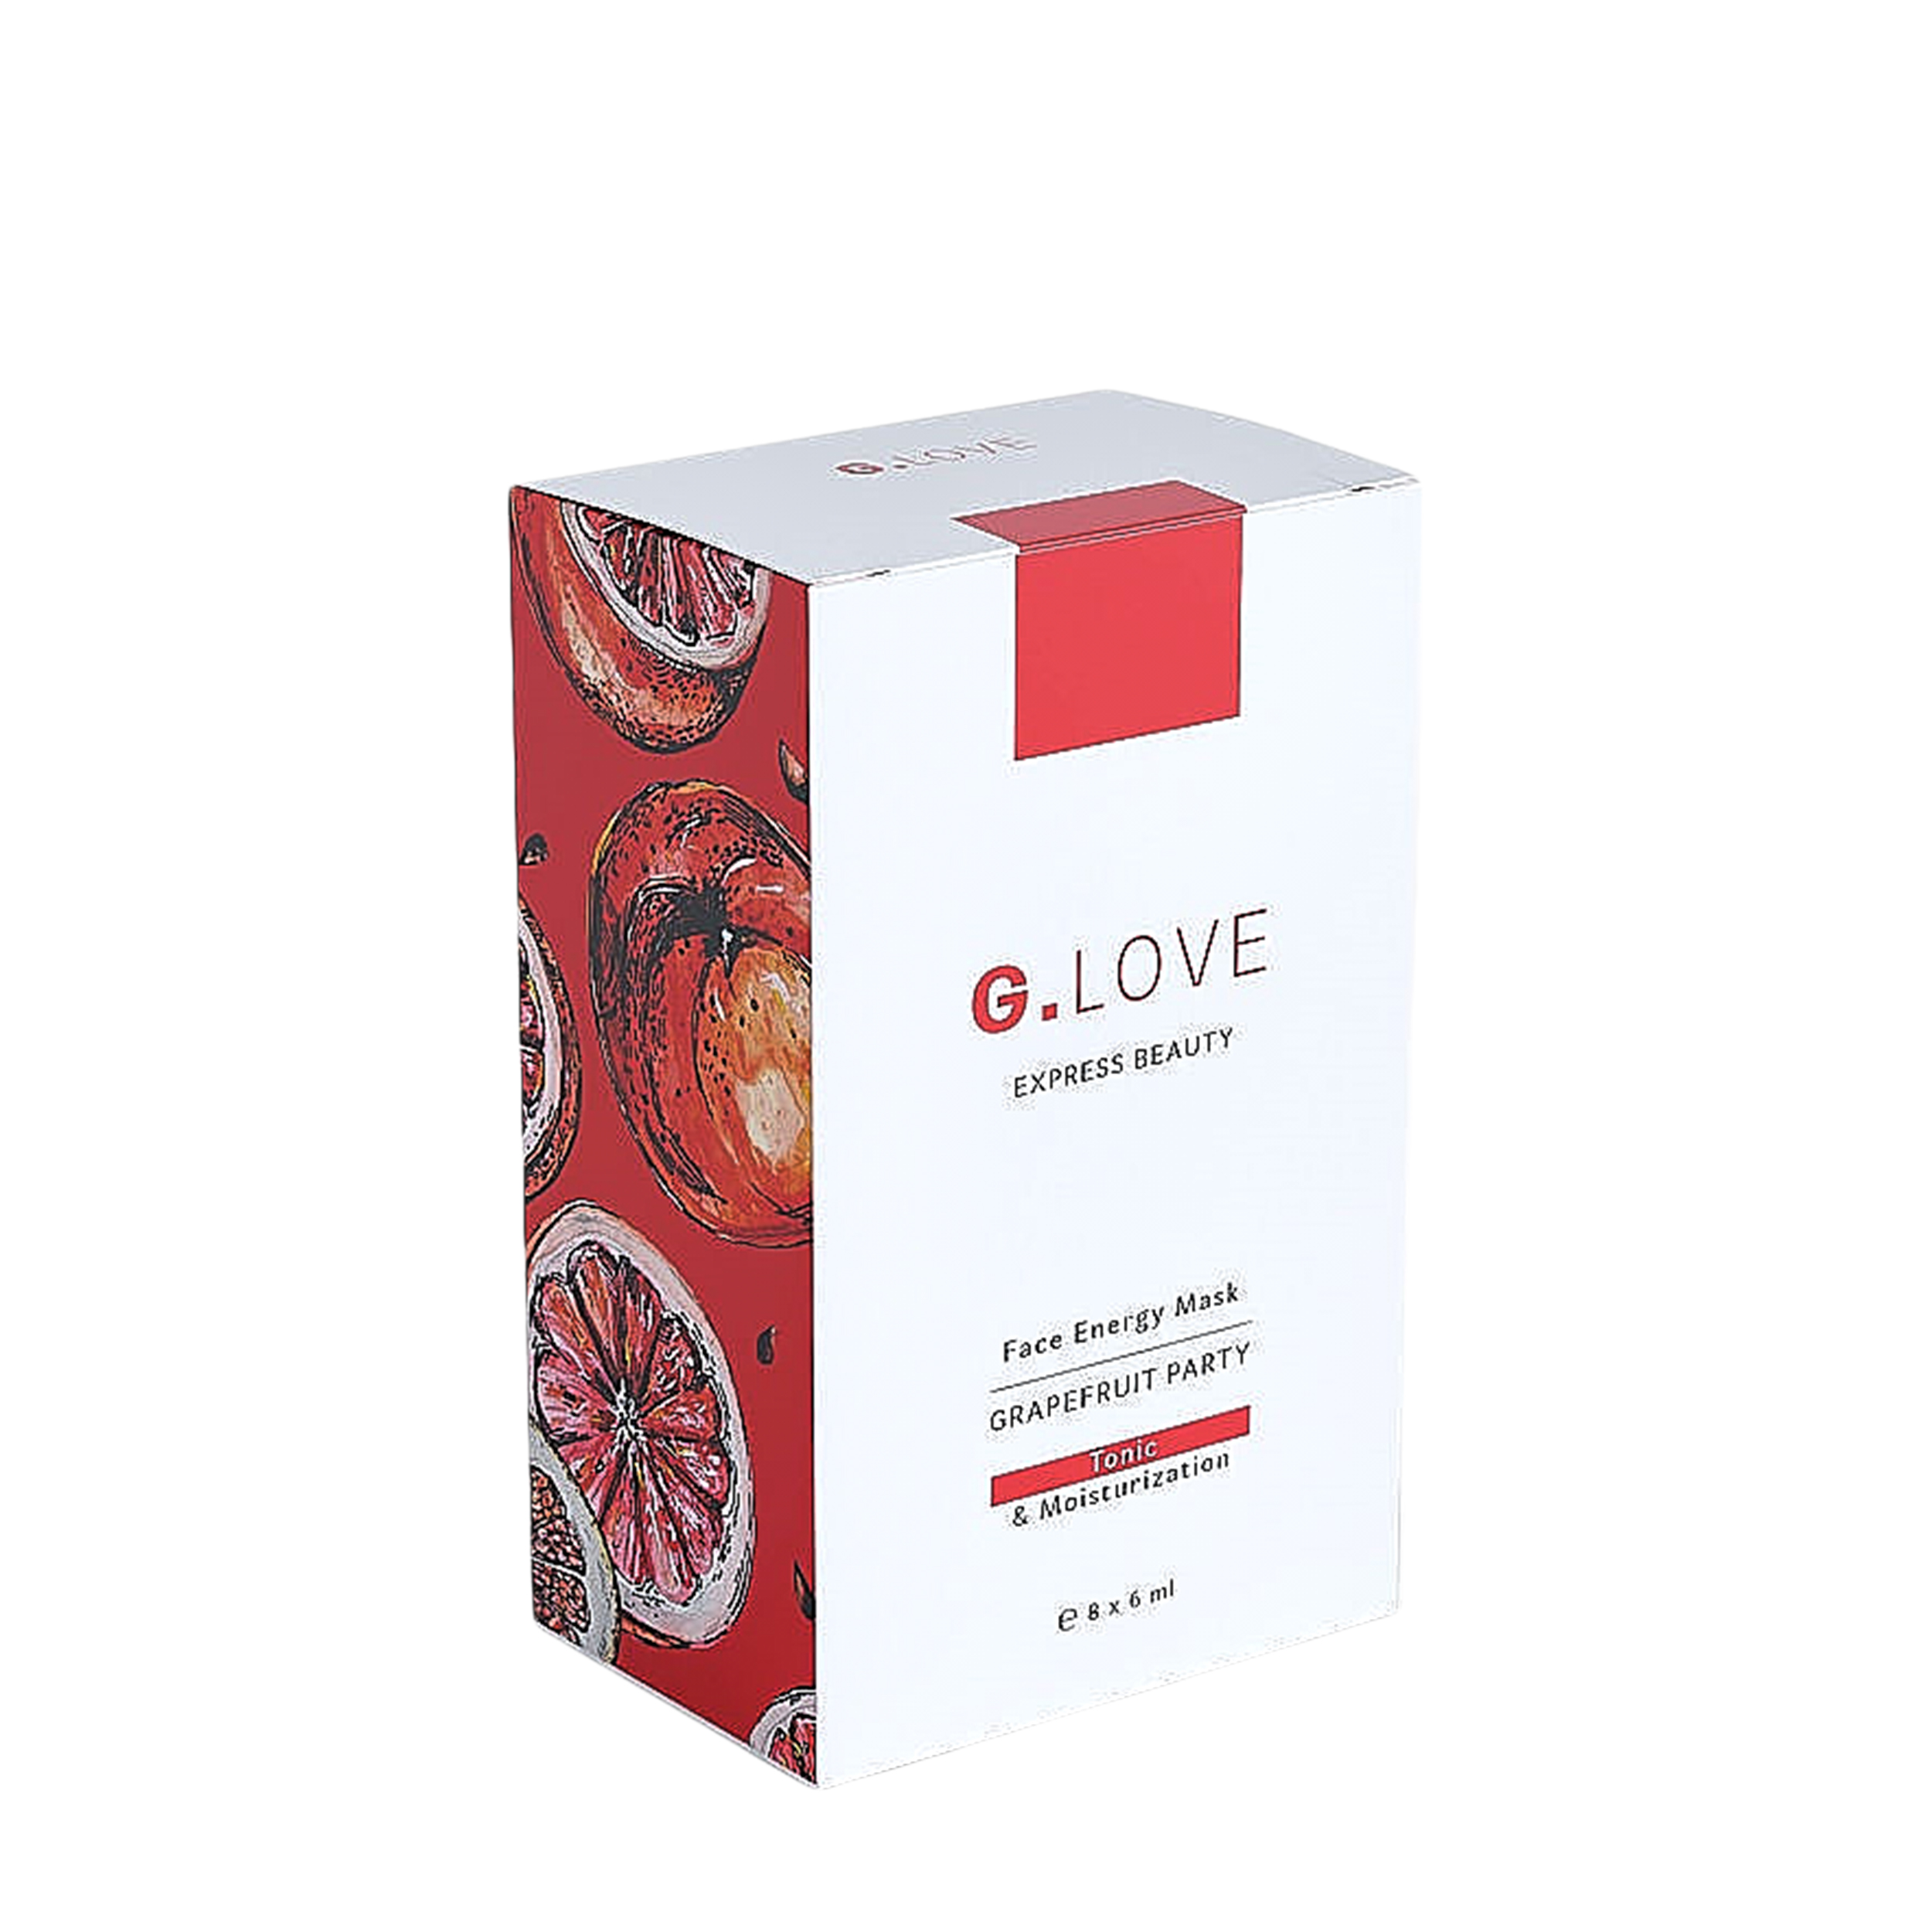 G.LOVE G.LOVE Тонизирующая увлажняющая маска для лица Grapefruit Party 8x6 мл